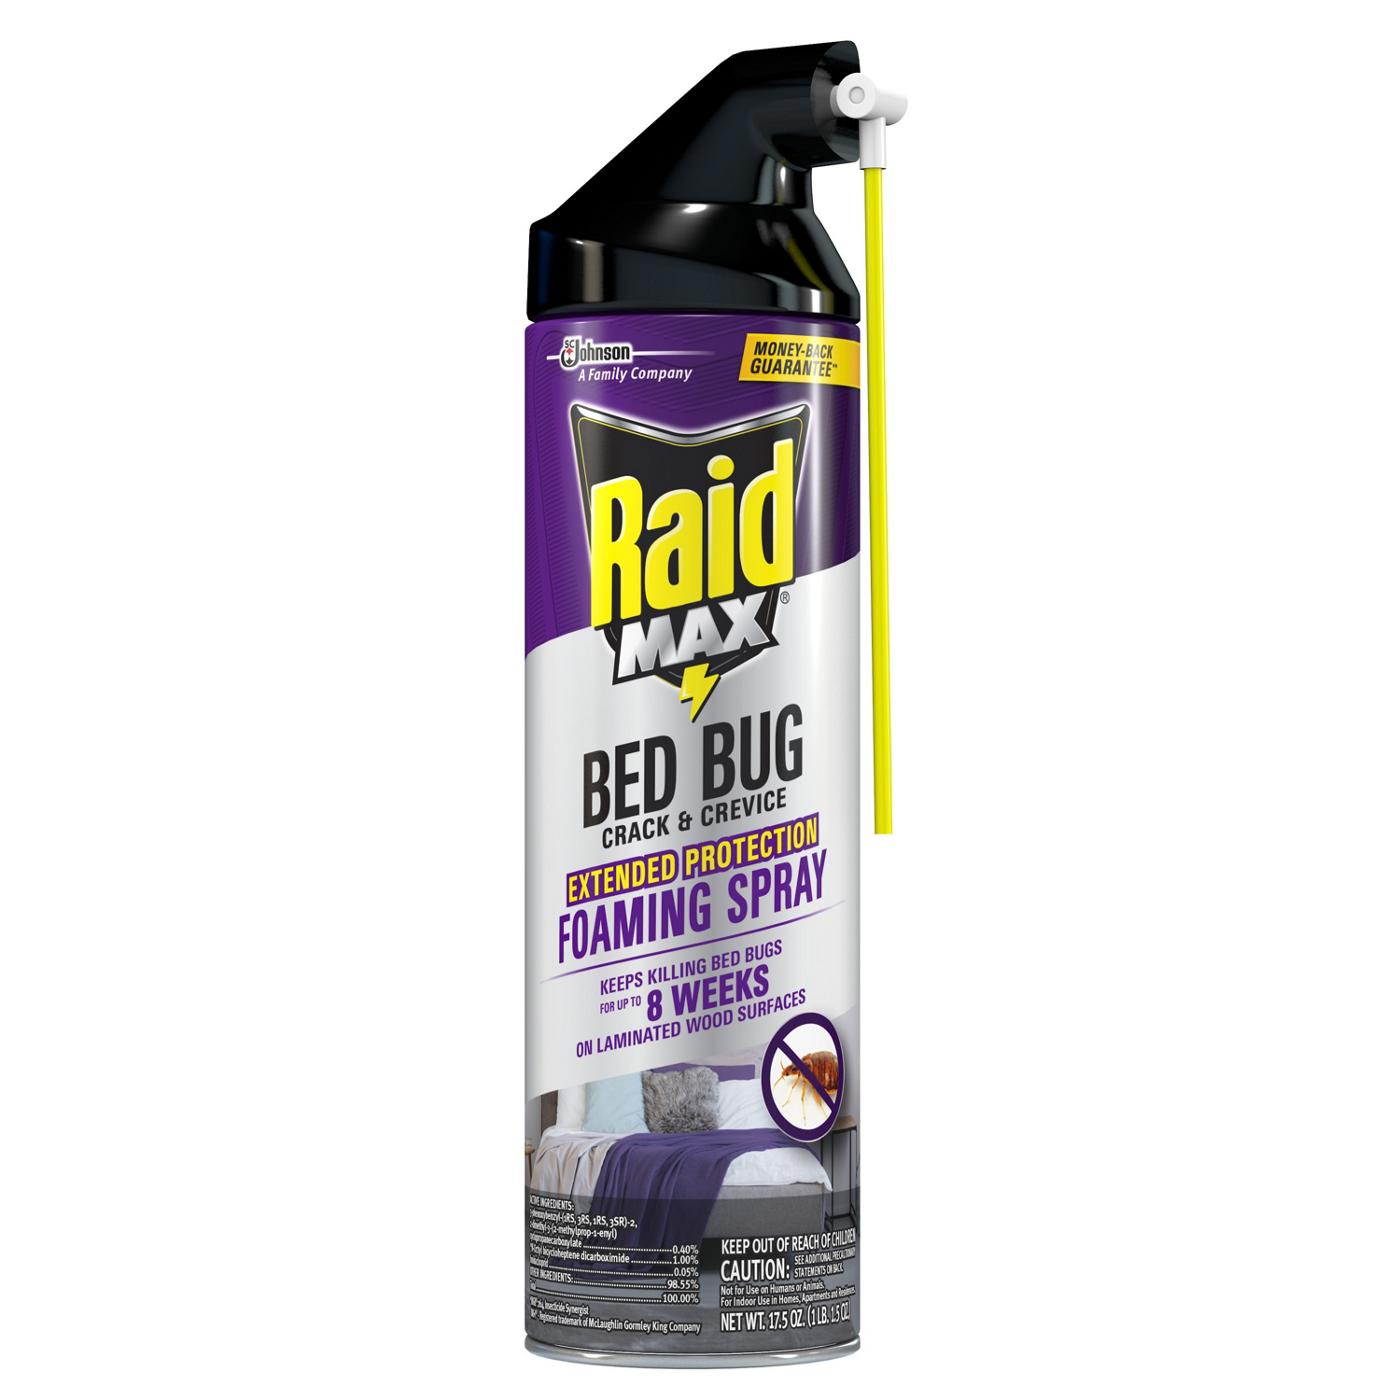 Raid MAX Bed Bug Foaming Spray; image 1 of 2